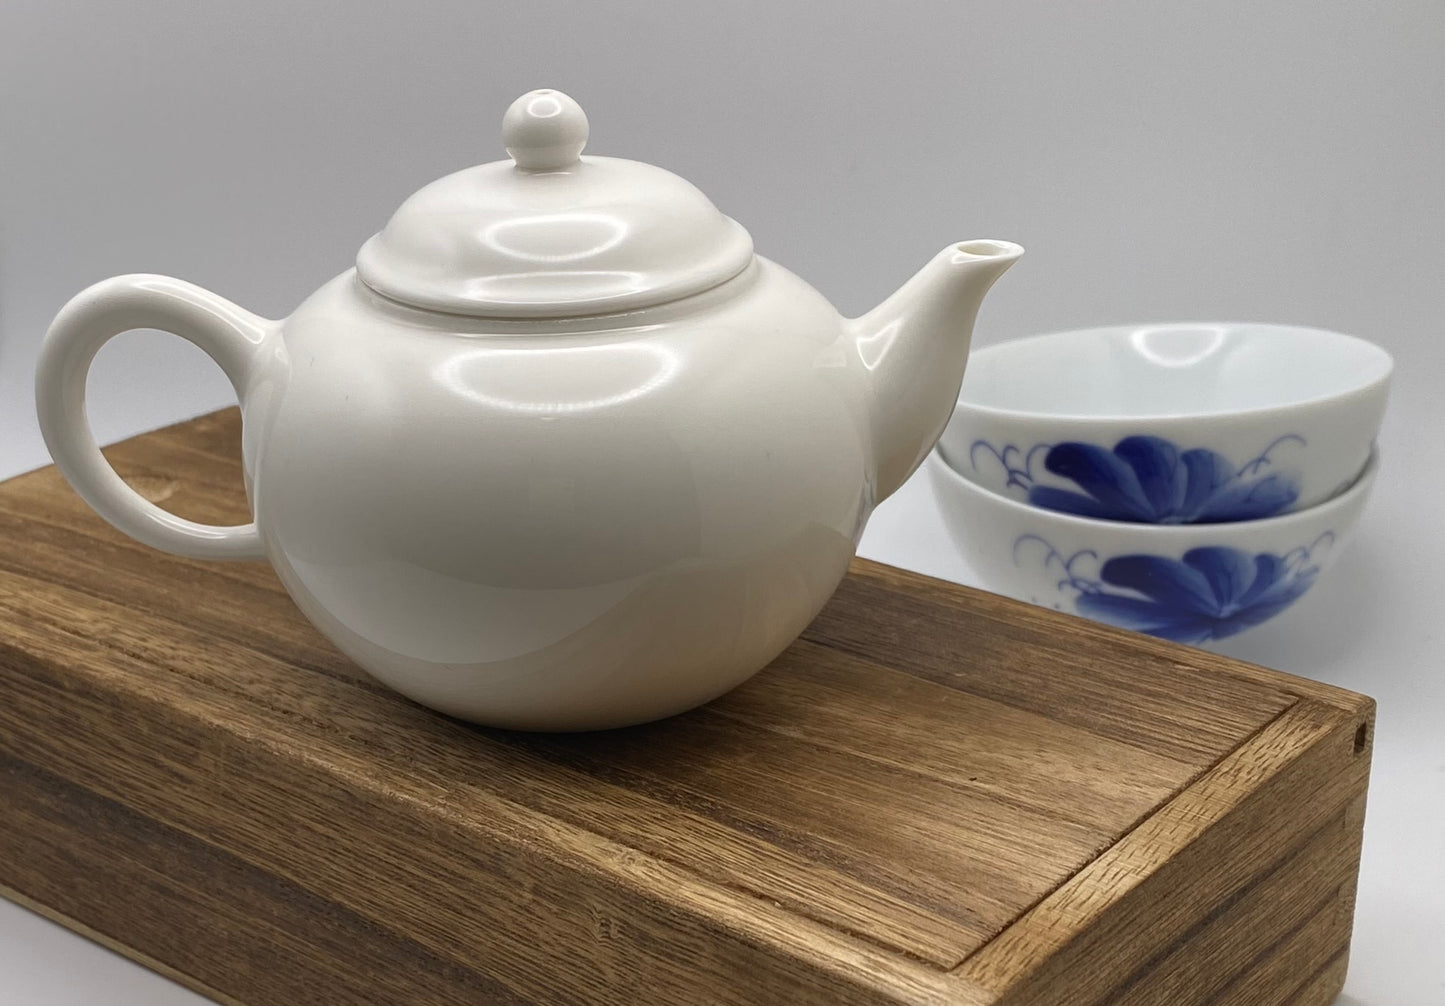 Hand-painted Blue Lotus Half-Moon Mingyue Porcelain Cup